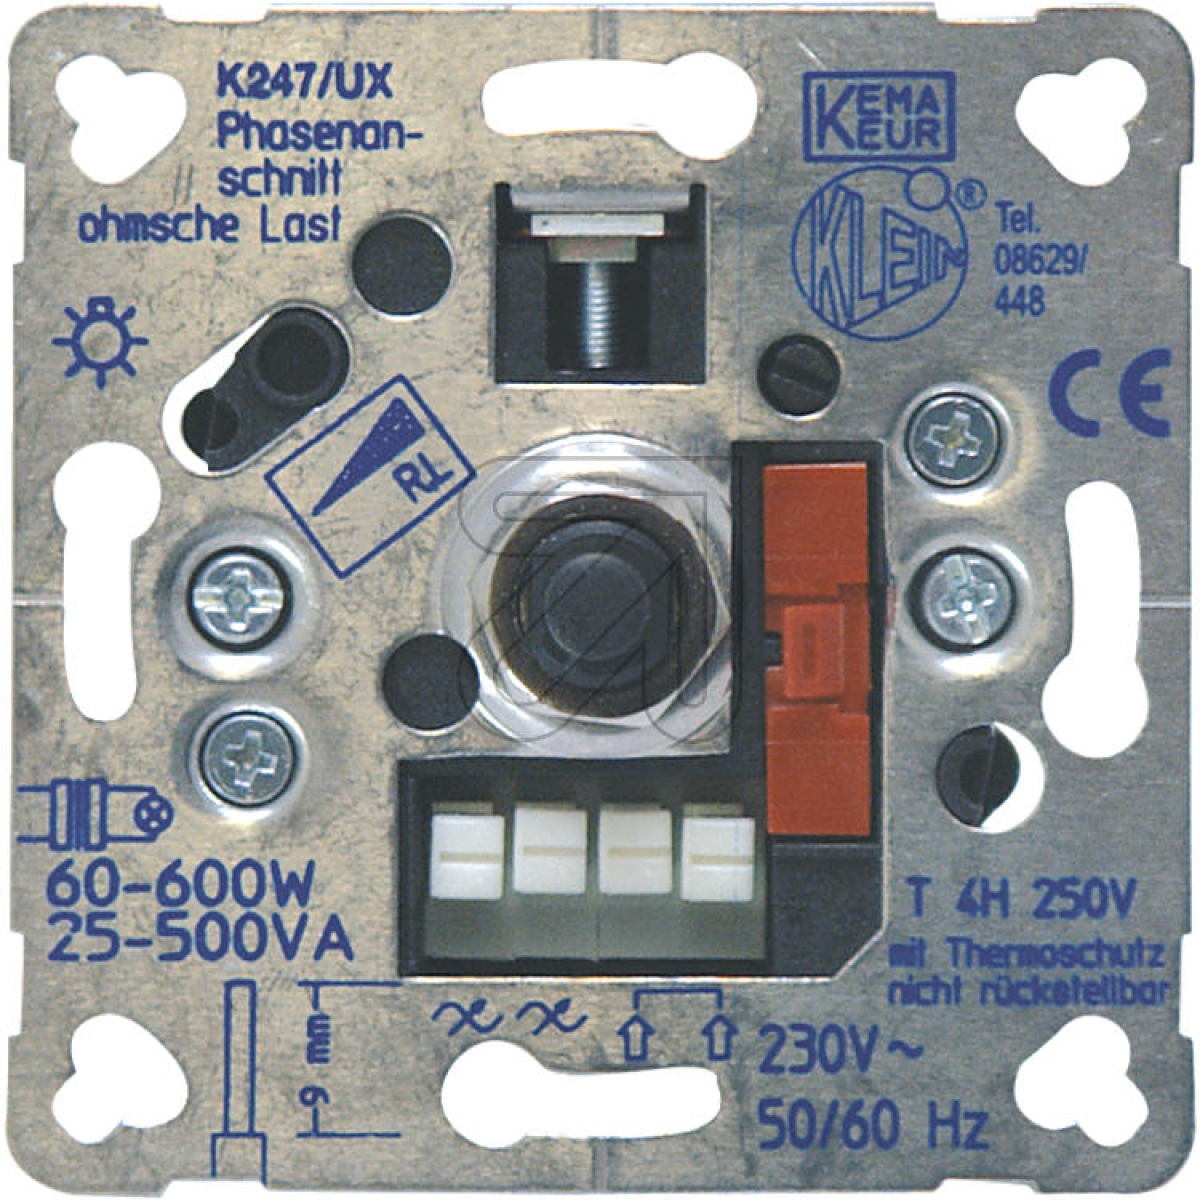 Kleinphase control dimmer K247/UX